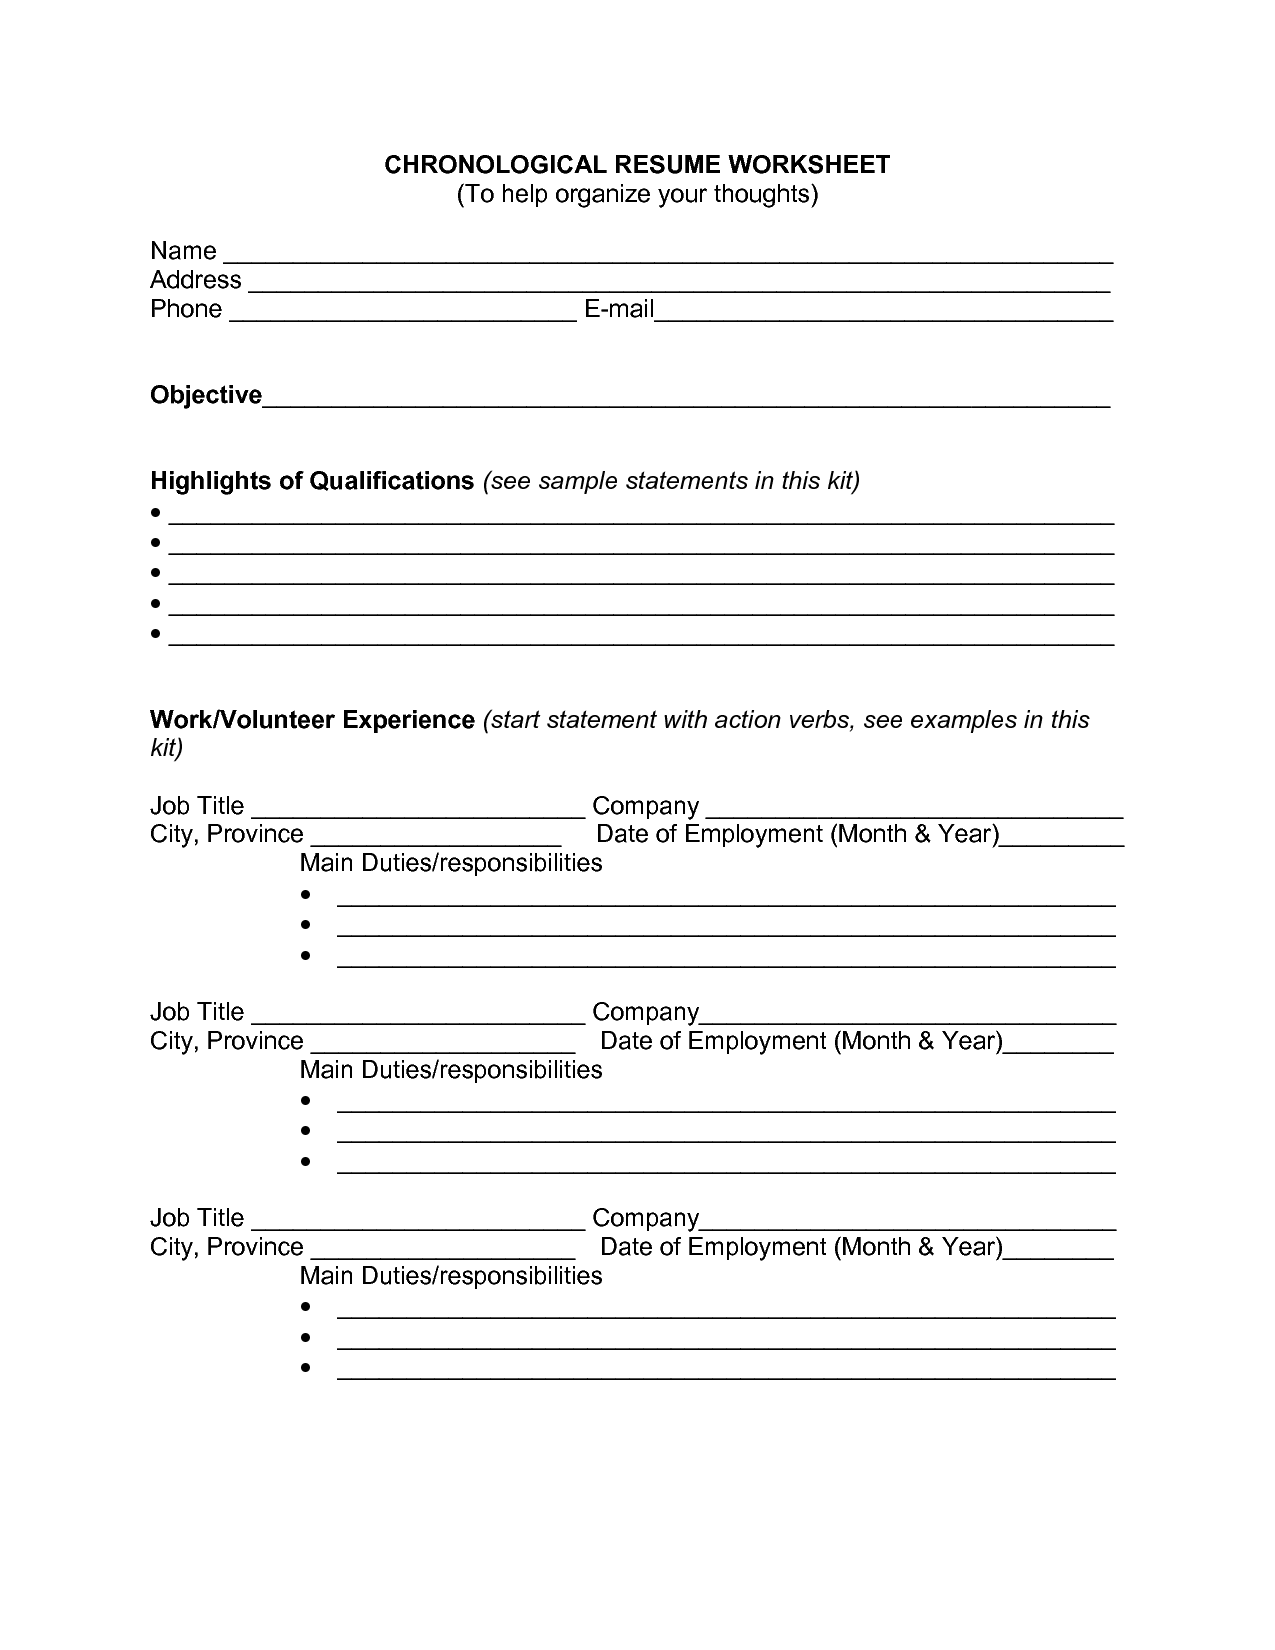 Chronological Resume Worksheet Image